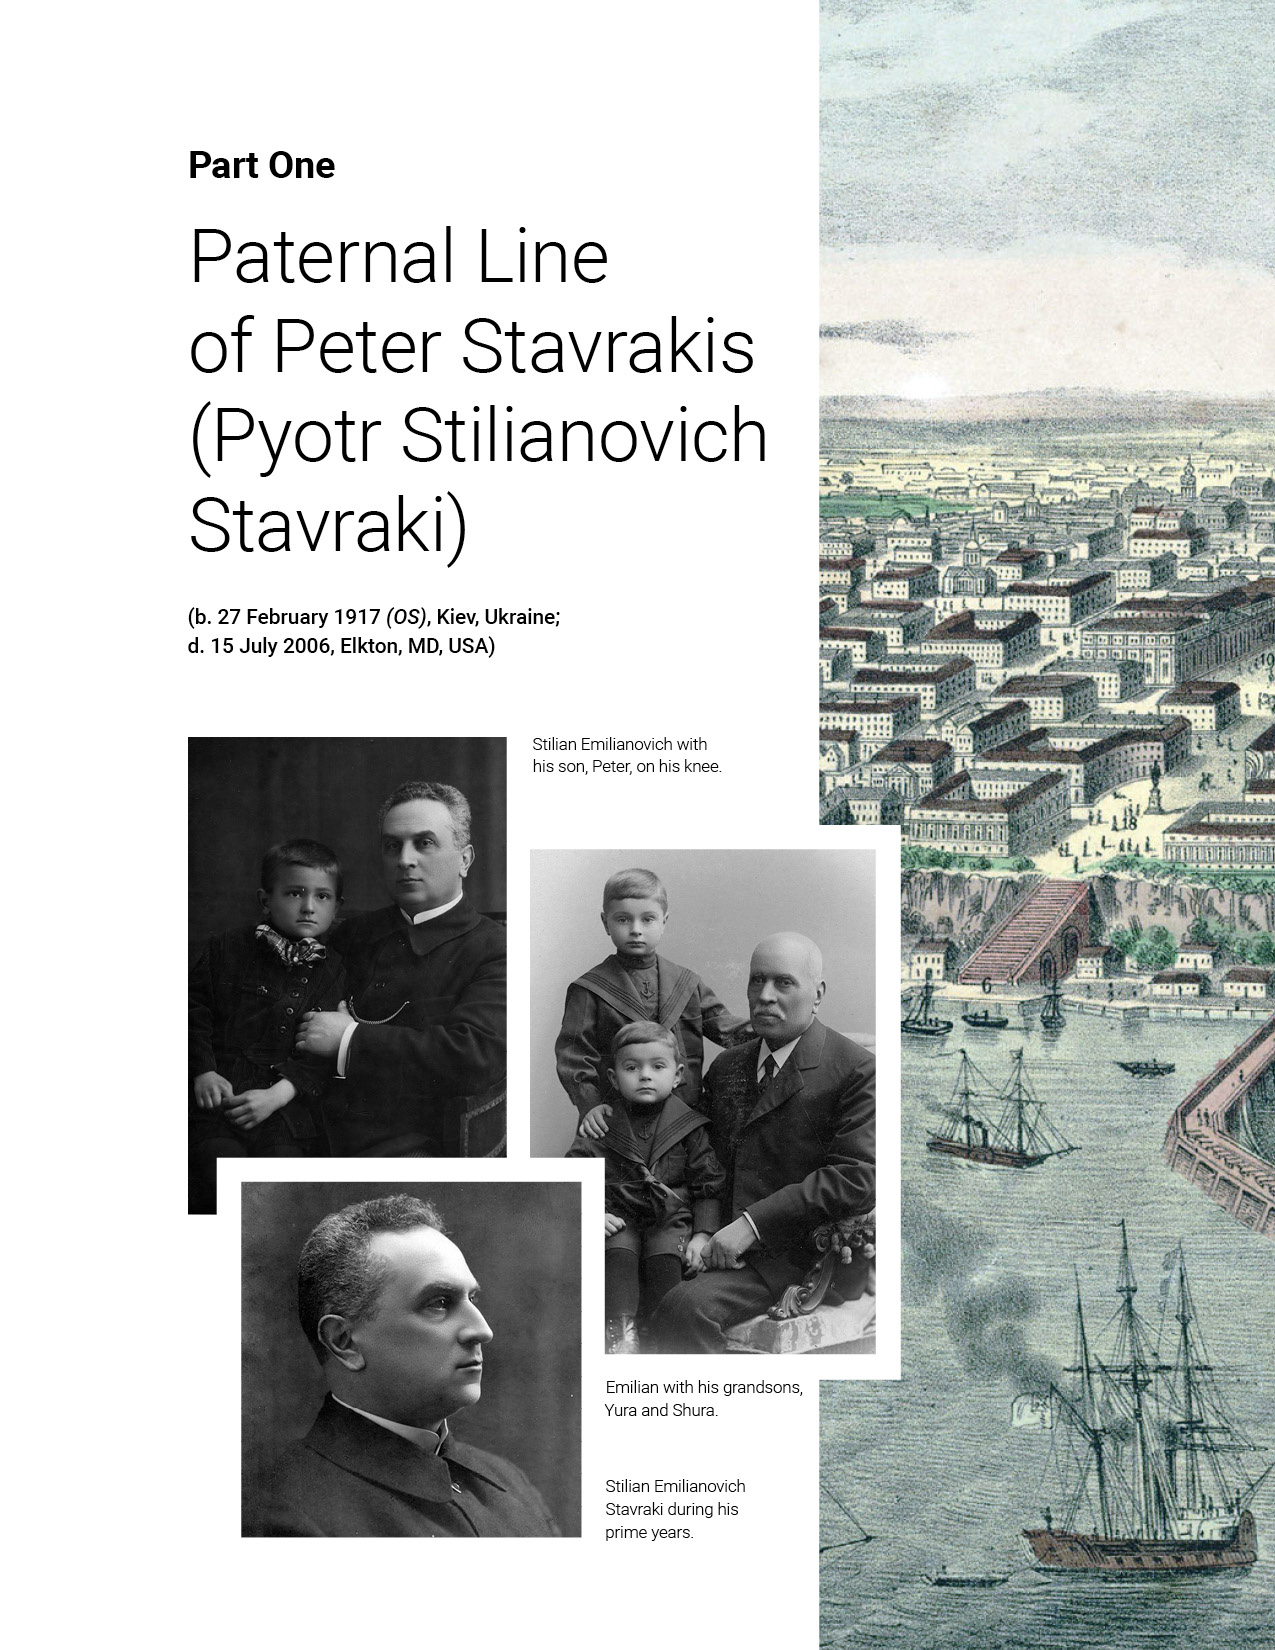 Part 1: Paternal Line of Peter Stavrakis